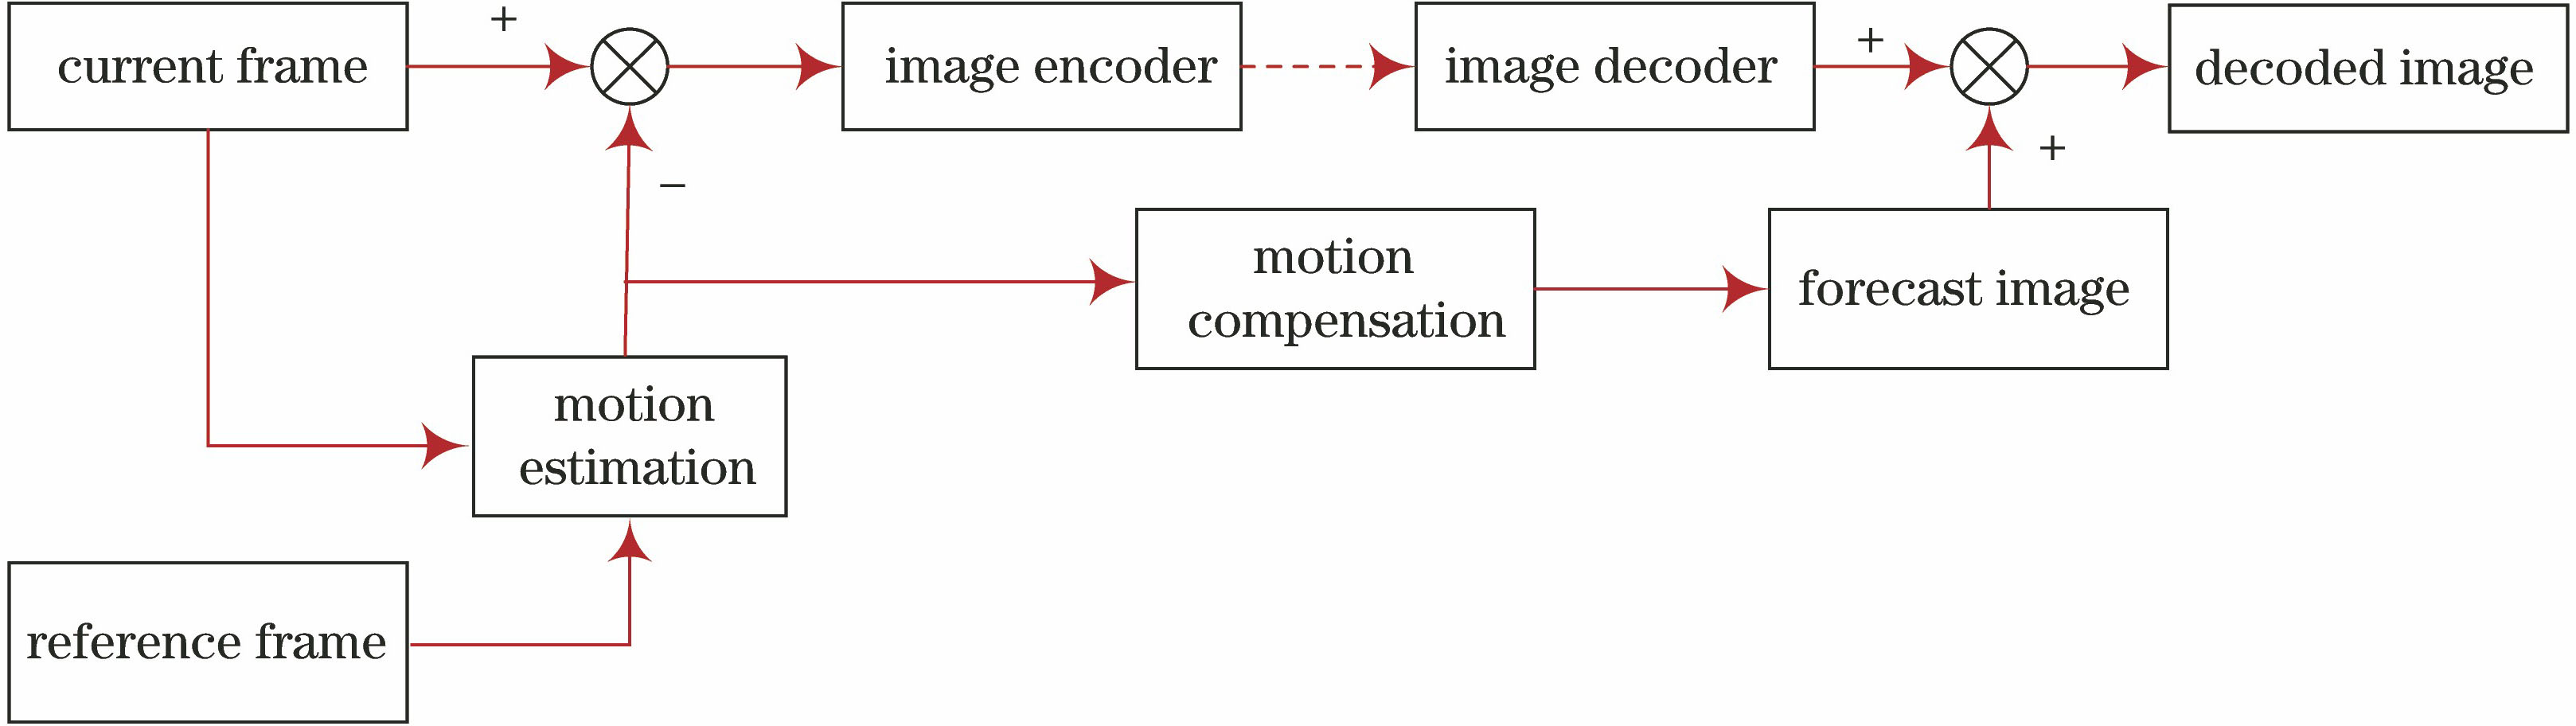 Image codec processing flows of ME amd MC